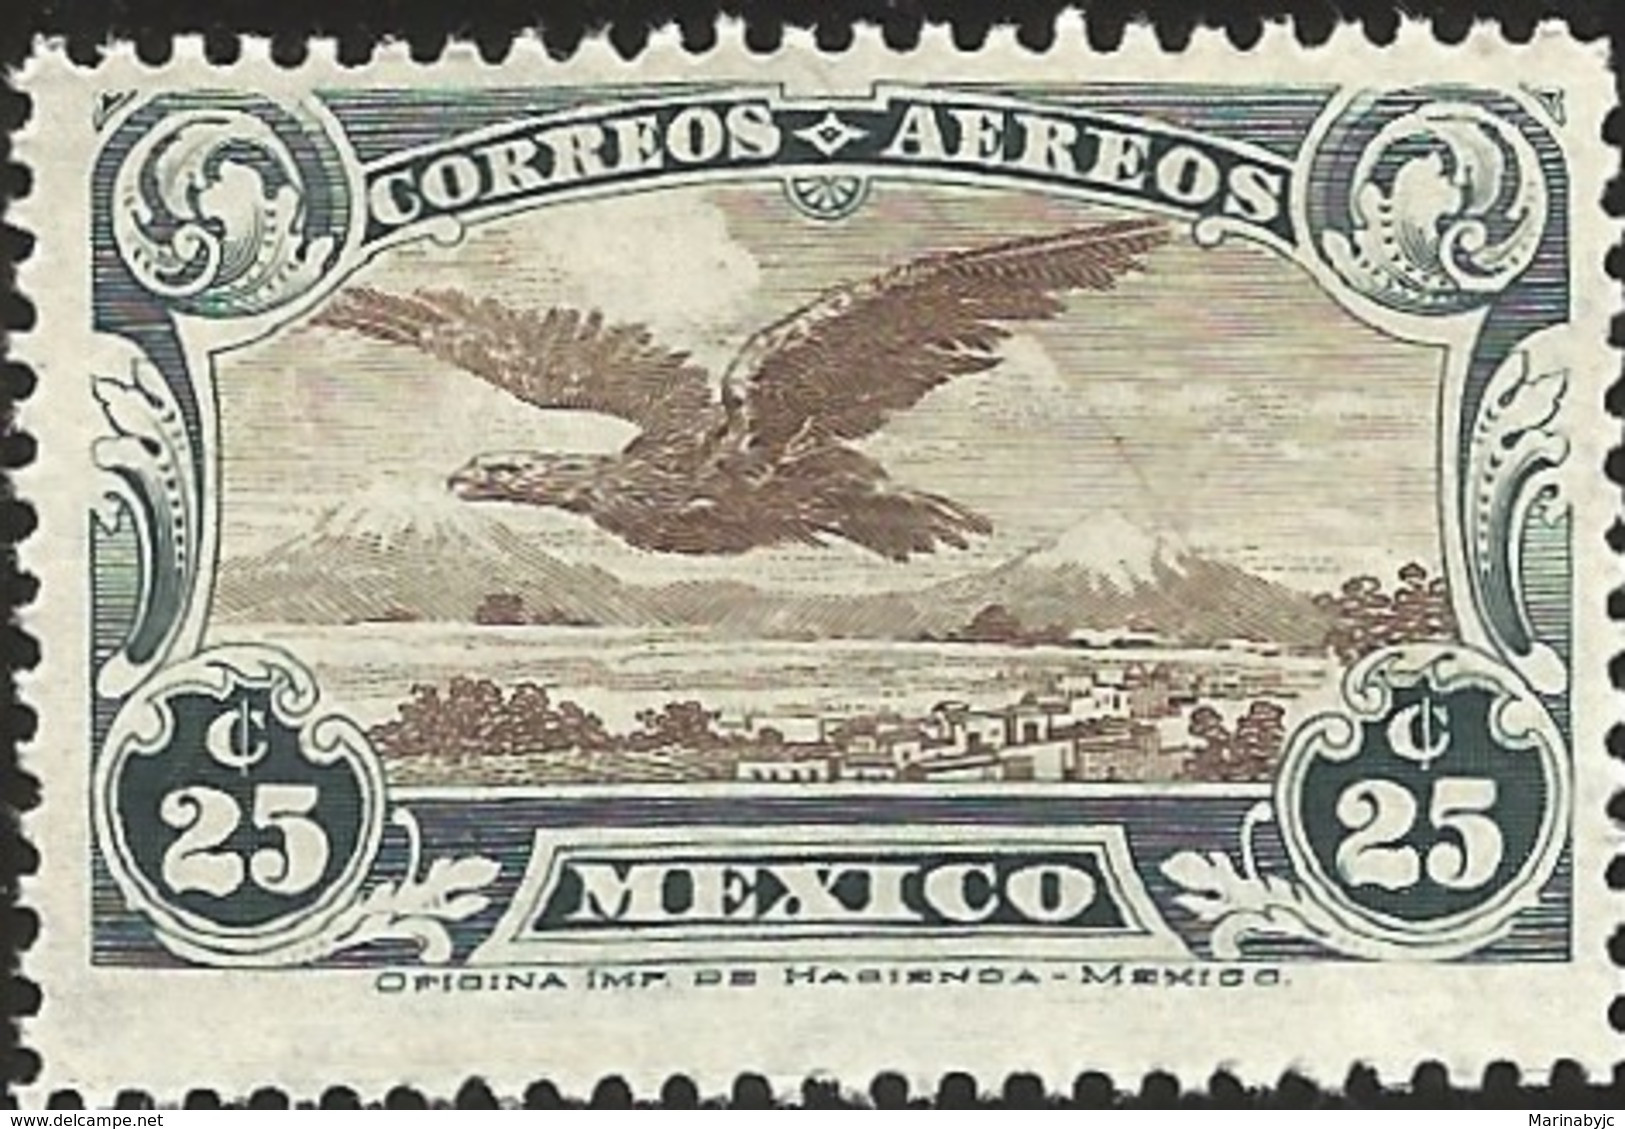 RJ) 1928 MEXICO, EAGLE FLYING OVER MOUNTAINS, SCOTT C4, MNH - Mexico